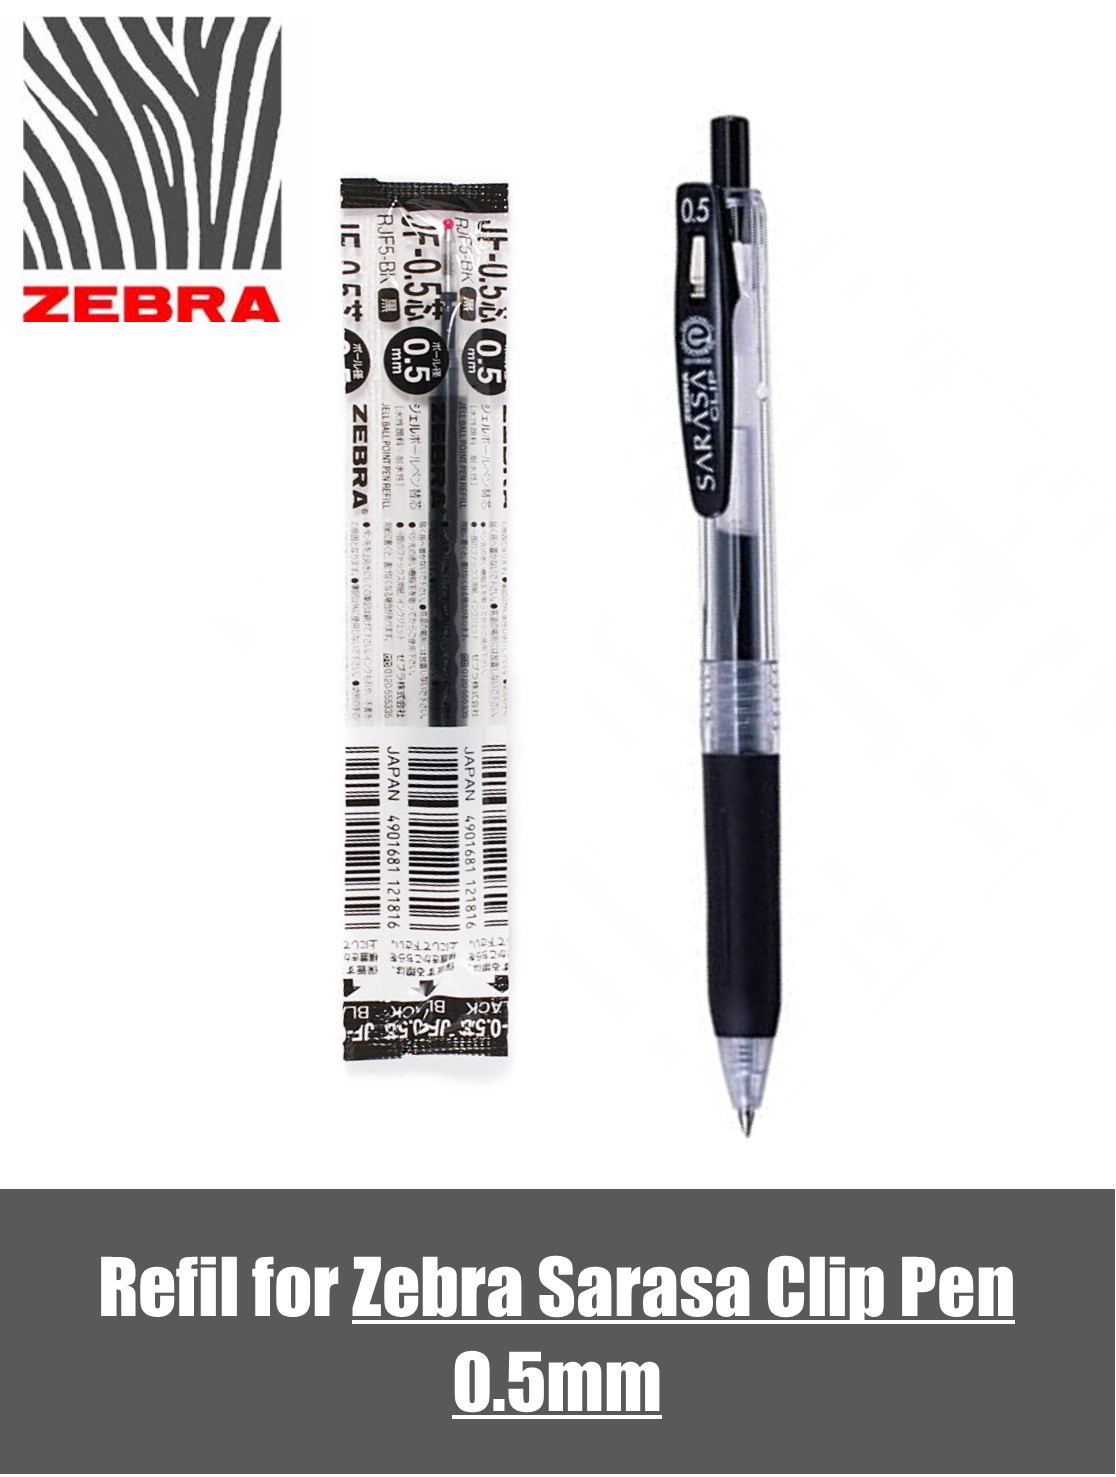 Tracking No. 10Pcs ZEBRA SARASA Clip 0.4mm Roller ball Pen BlueBlack Japan 